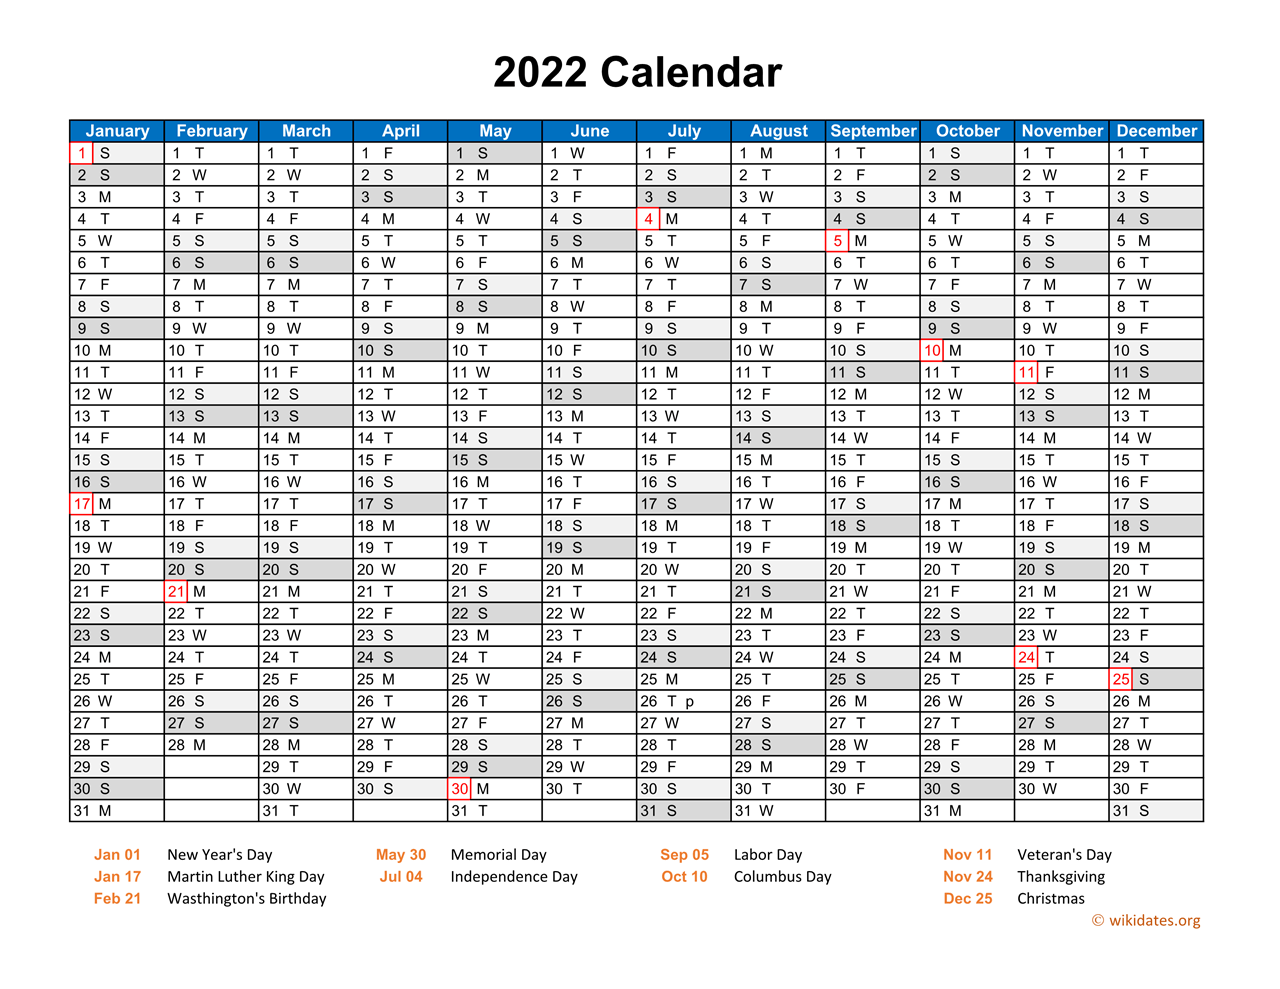 2022 calendar horizontal one page wikidates org